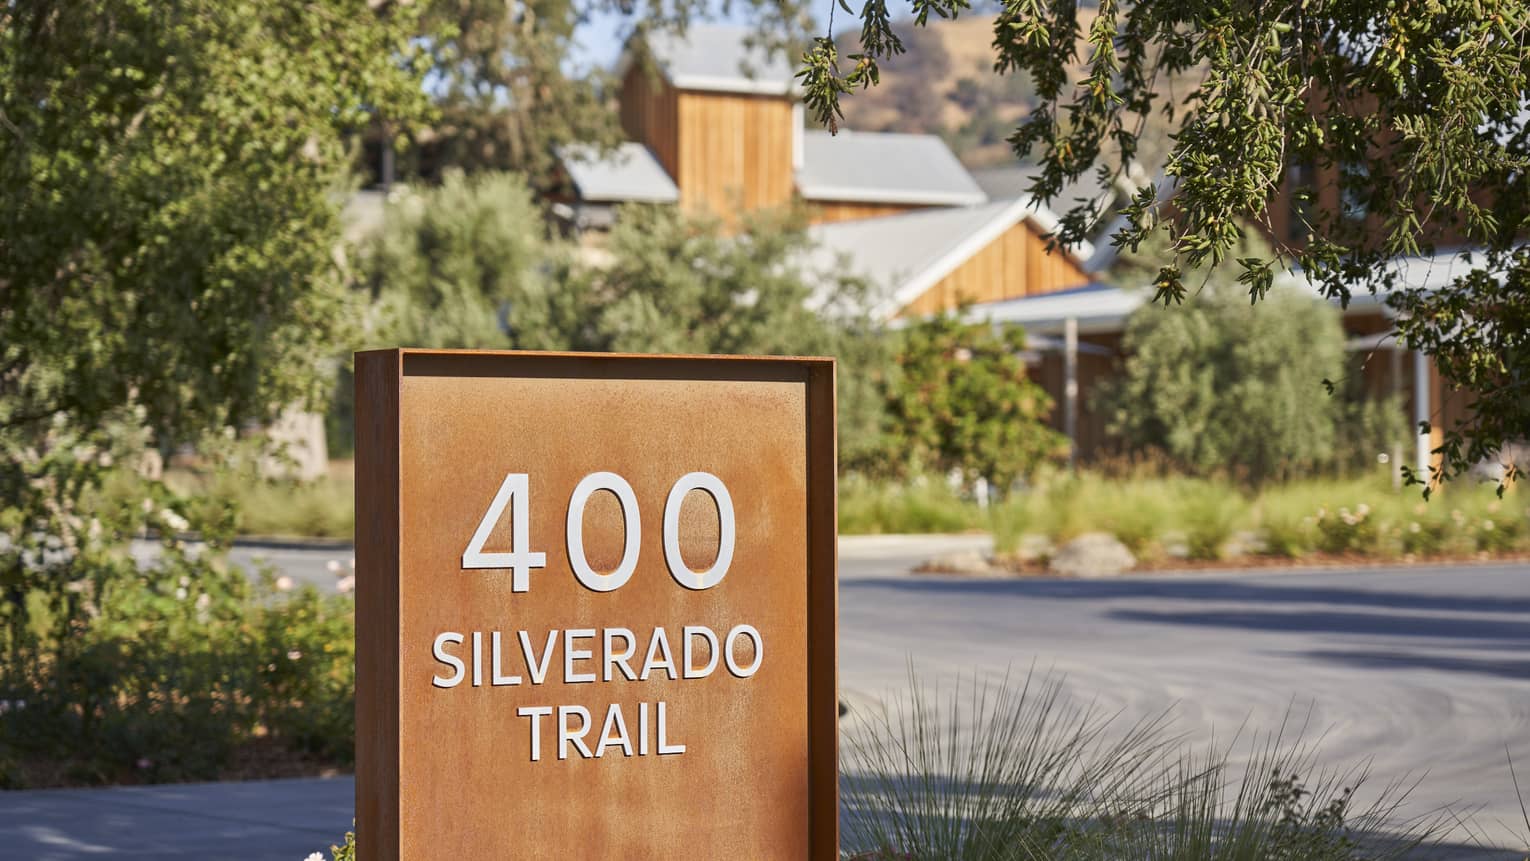 A street sign that says "400 Silverado Trail."